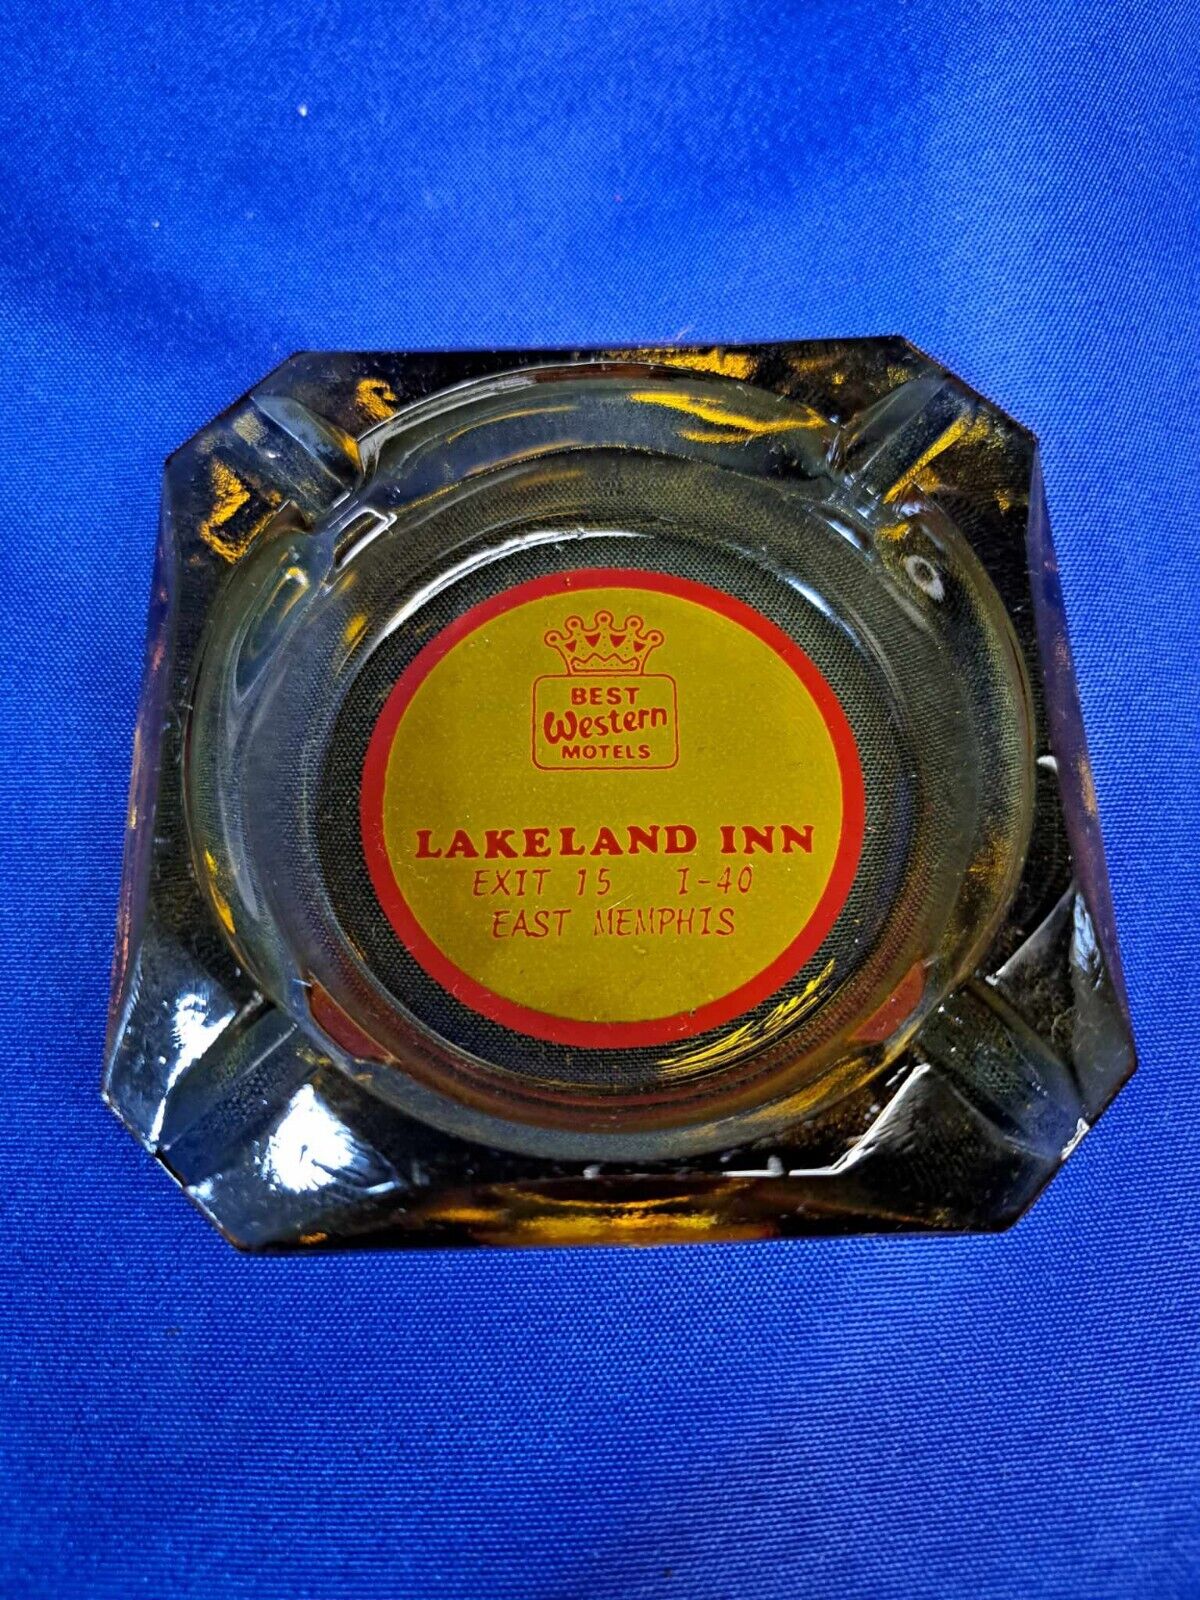 Best Western Motels Lakeland Inn Glass Ashtray Vintage Advertising Yellow Amber